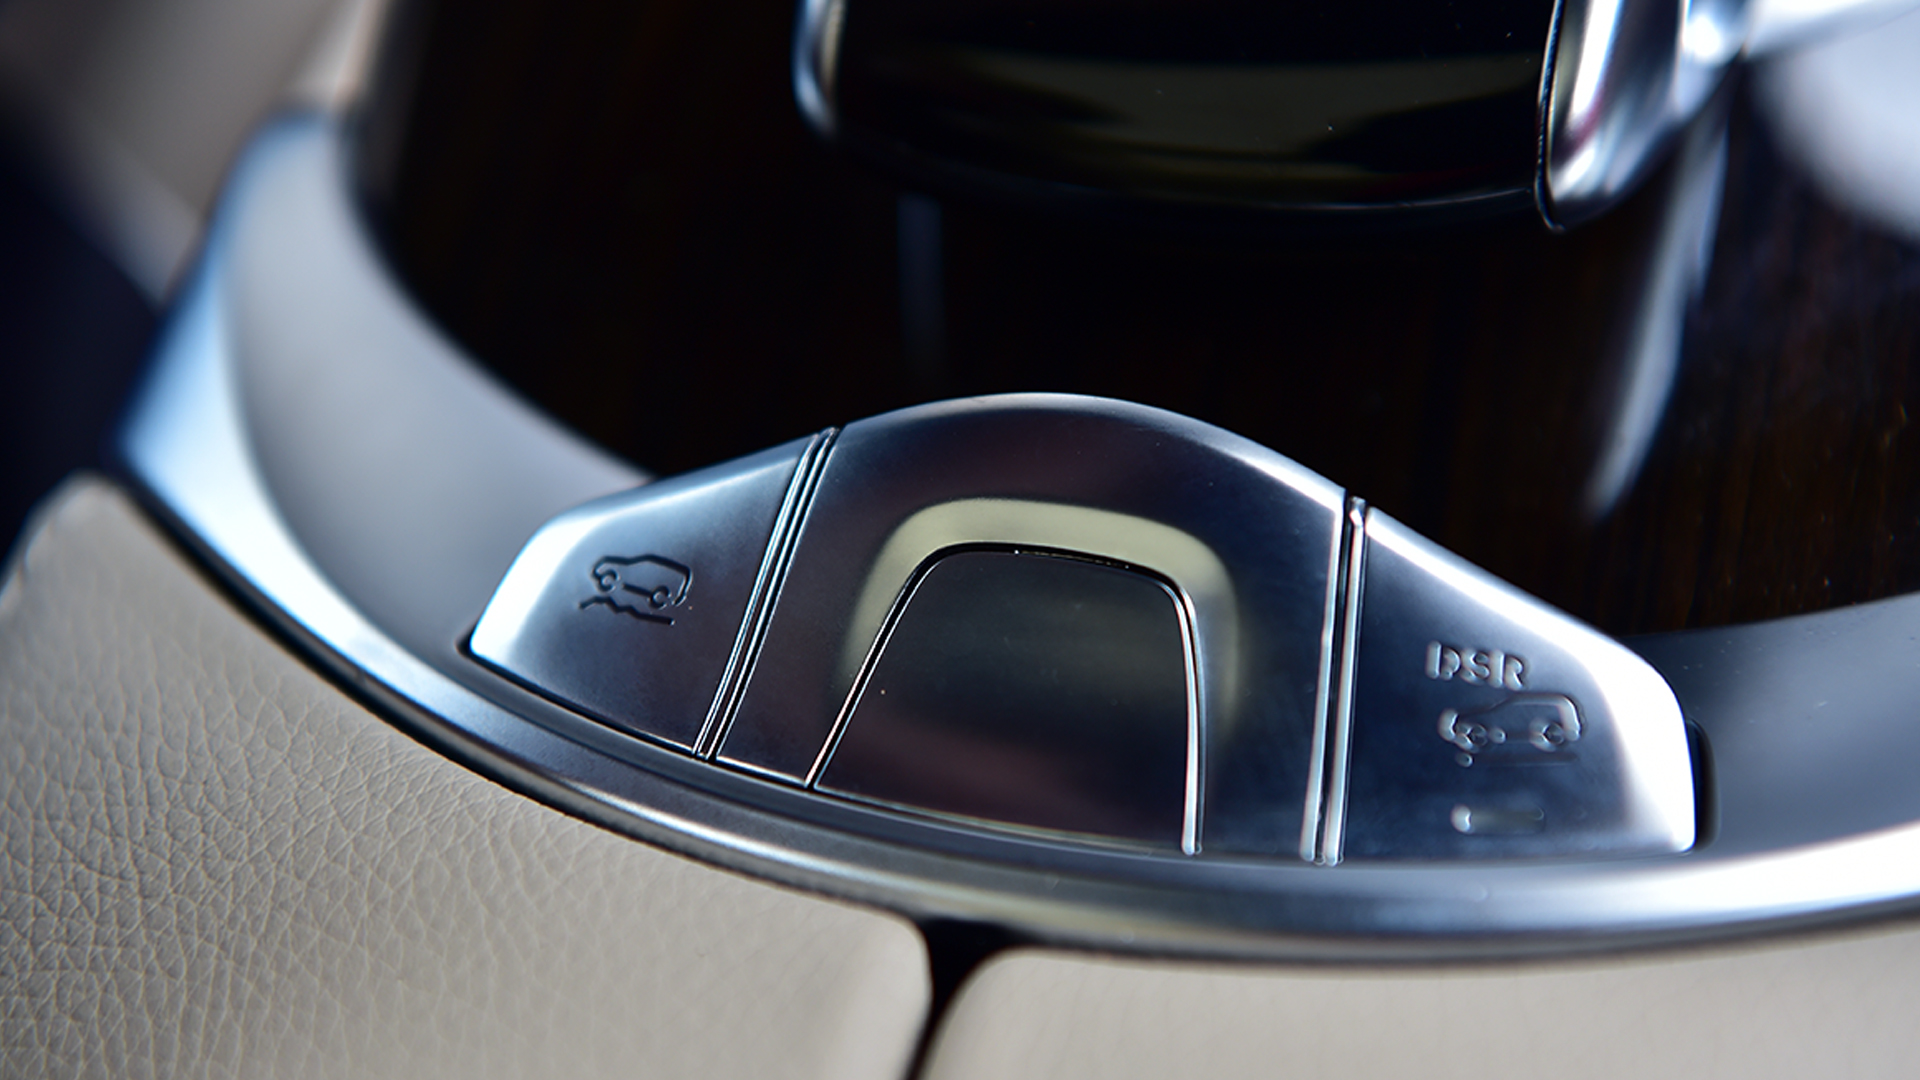 Mercedes-Benz GLC 2016 Edition 1 Interior